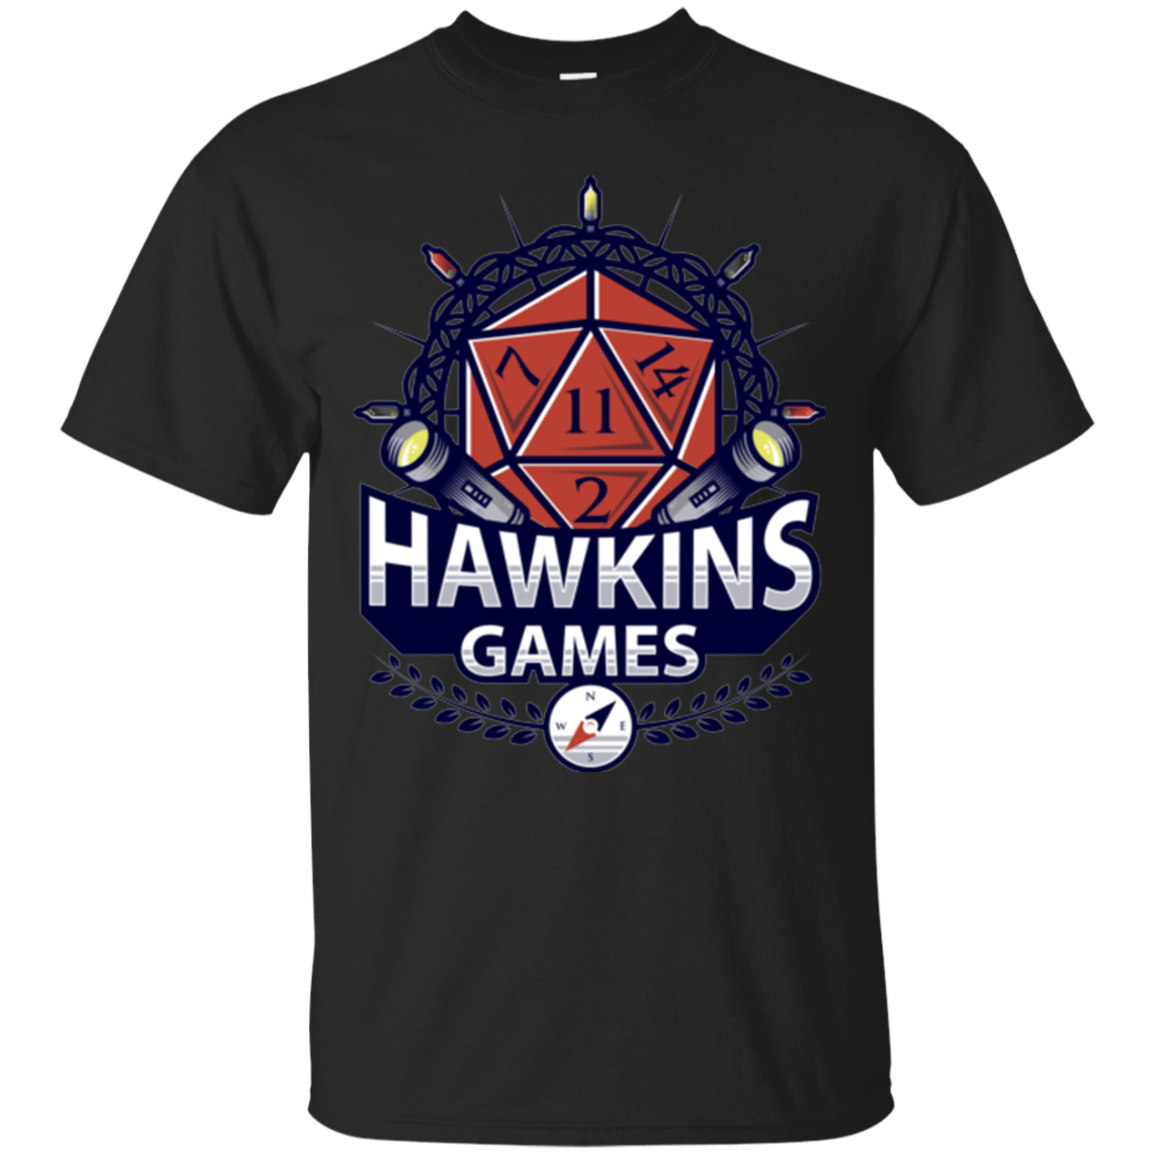 T-Shirts Black / Small Hawkins Games T-Shirt